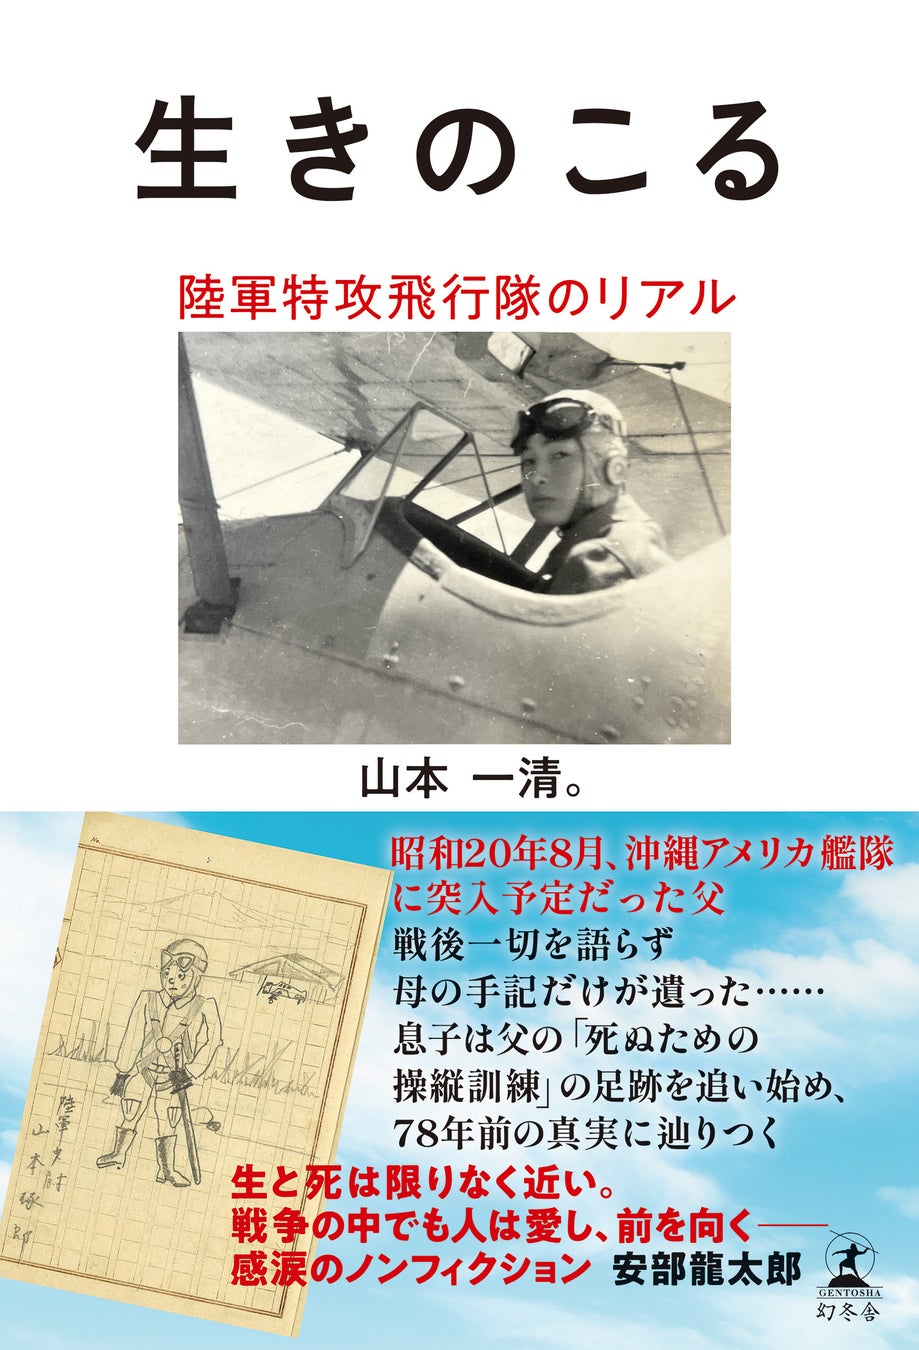 NHK「おはよう日本」で話題！特攻隊員だった父の足跡を辿る手記が出版